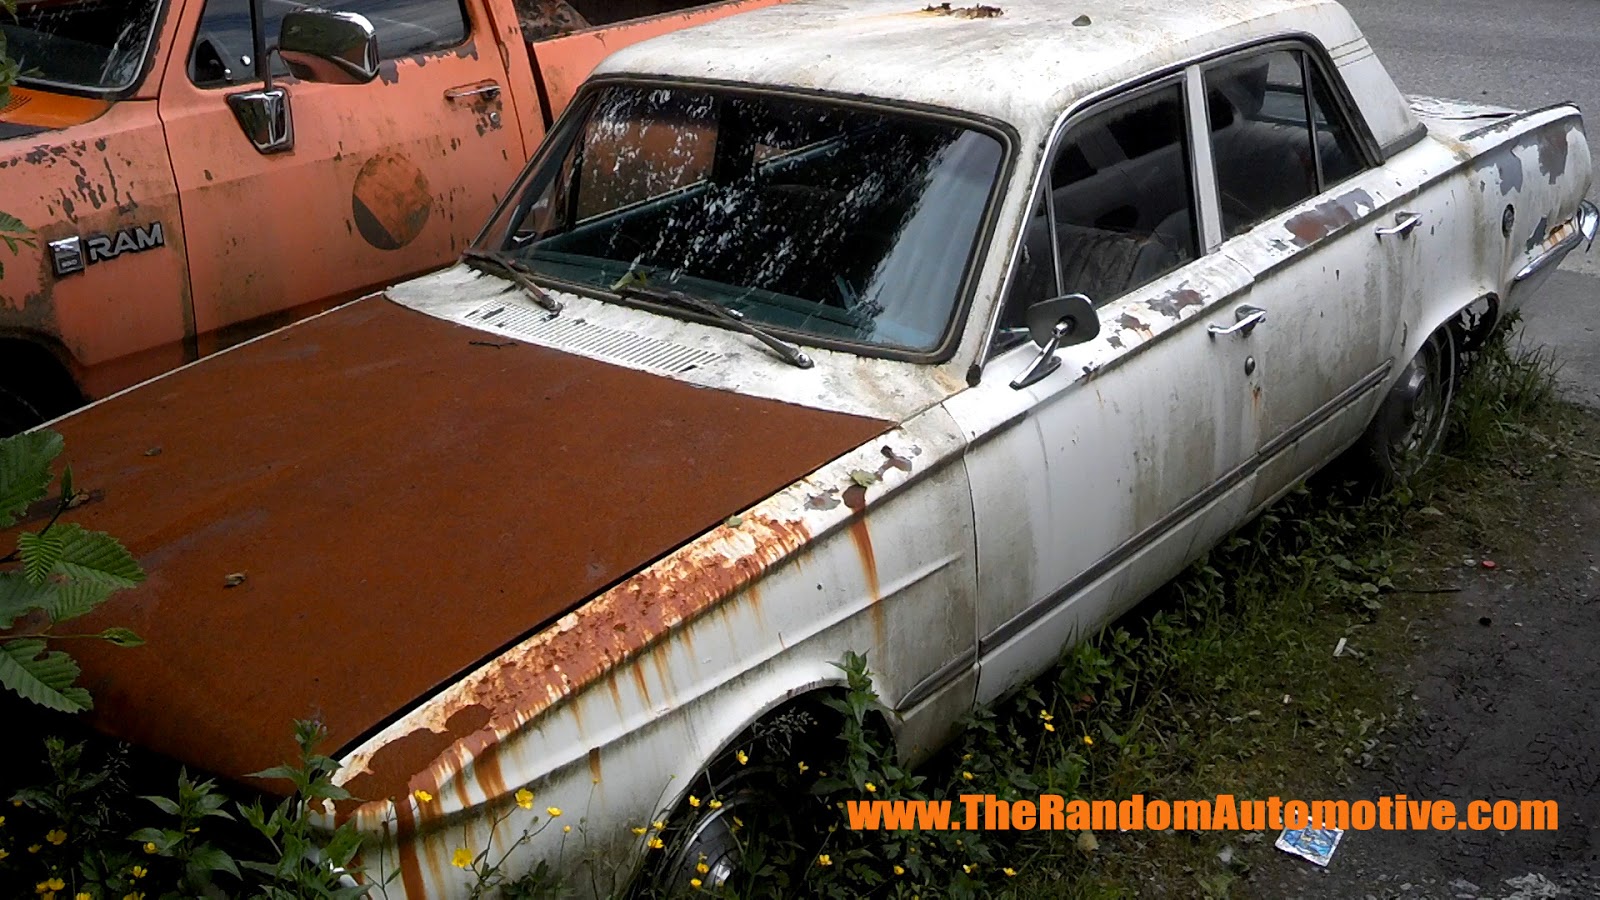 plymouth valiant abandoned alaska juneau tonguss dylan benson rotting in style rusty car